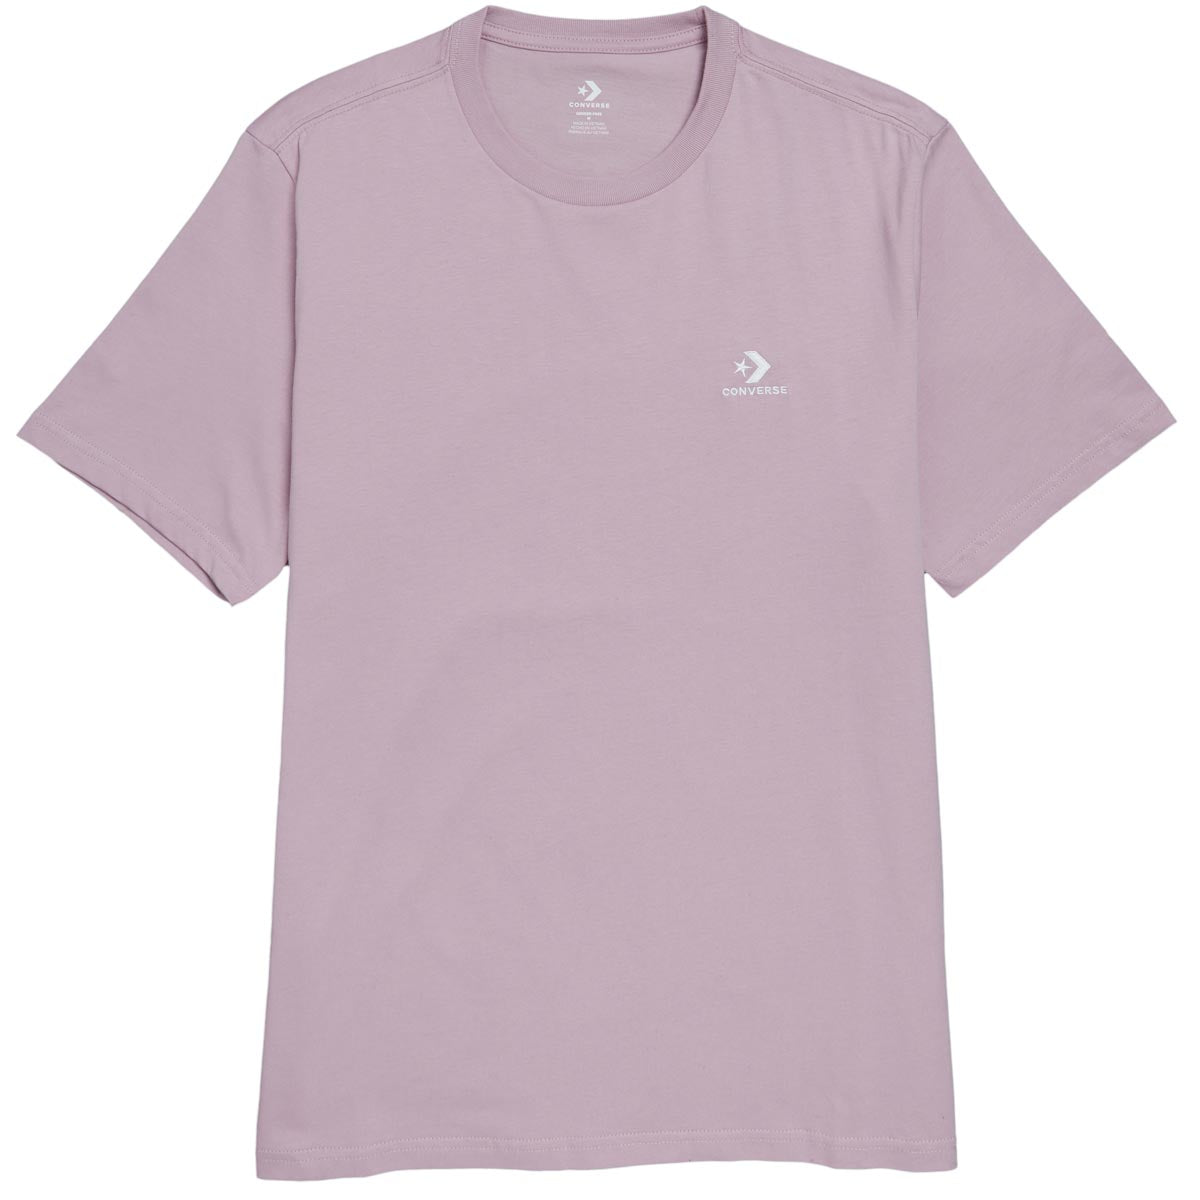 Converse Star Chevron T-Shirt - Phantom Violet image 1